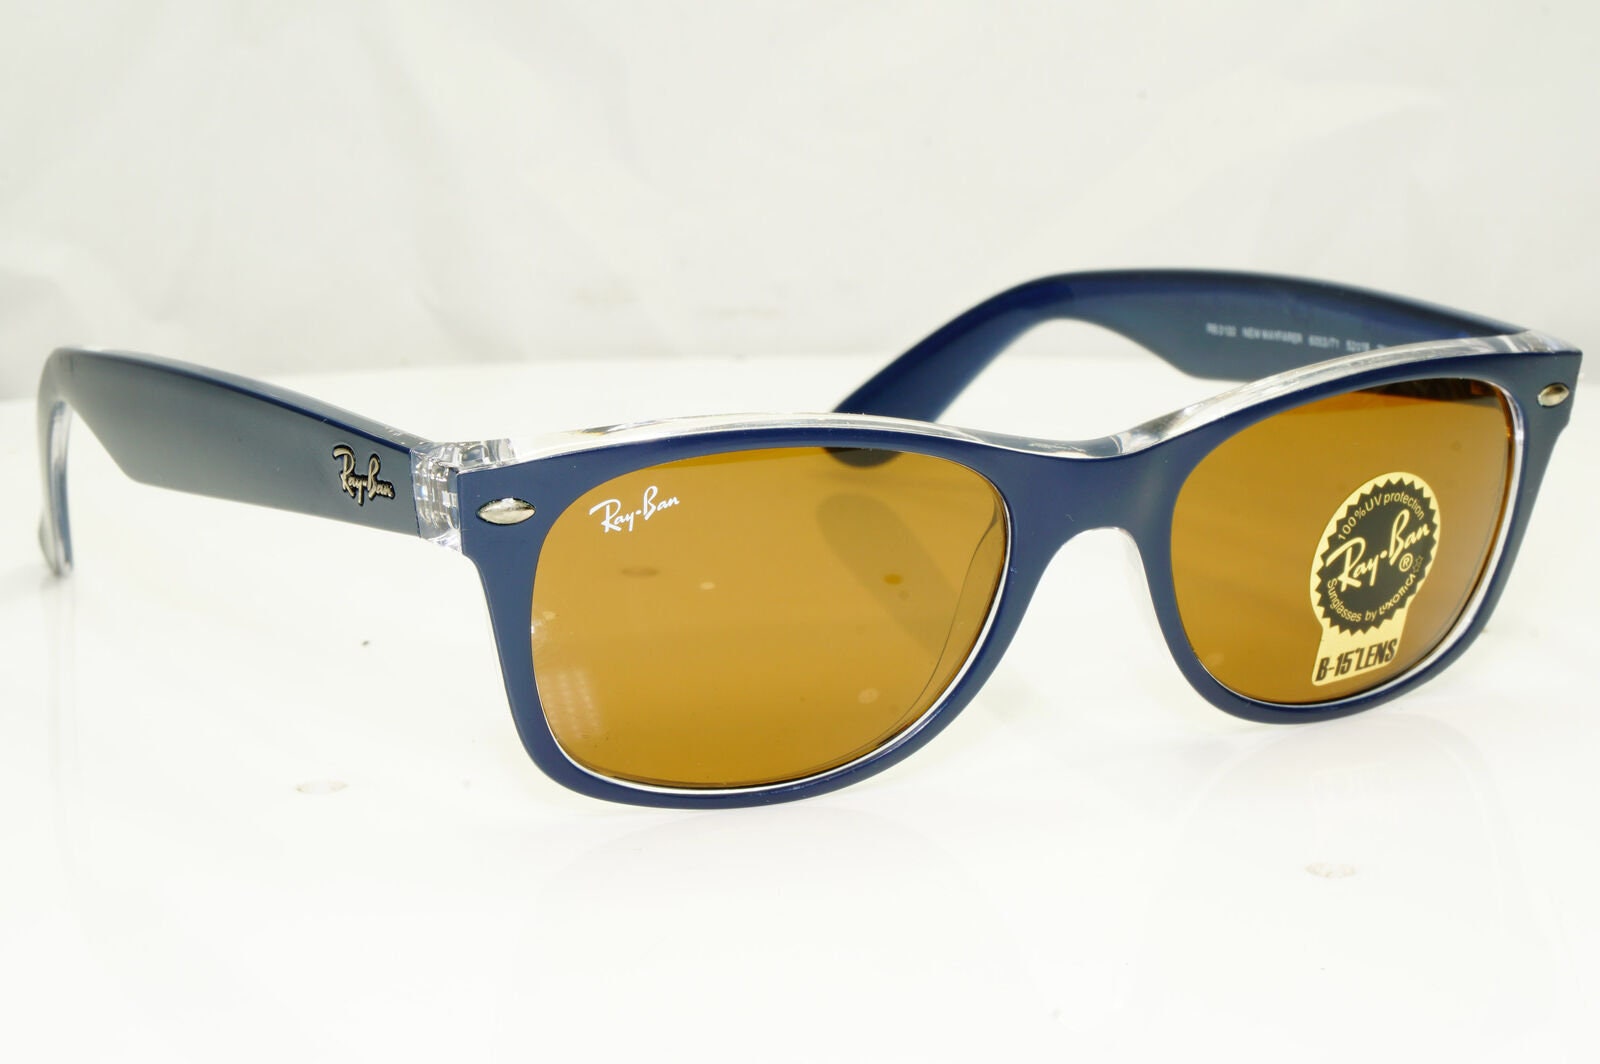 Authentic RayBan Vintage Sunglasses Rb 2132 New Wayfarer